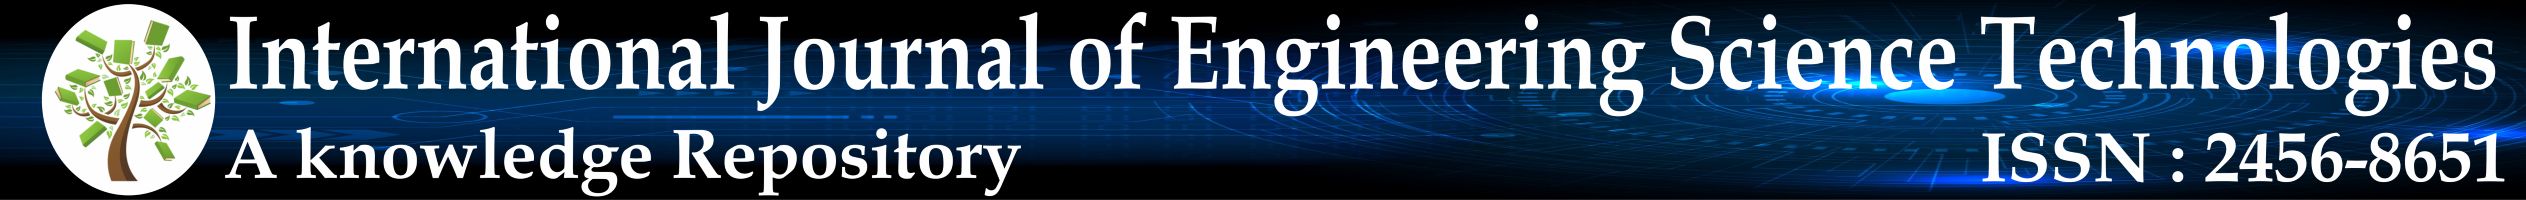 IJOEST International Journal of Engineering Science Technologies is an open access, peer reviewed journal